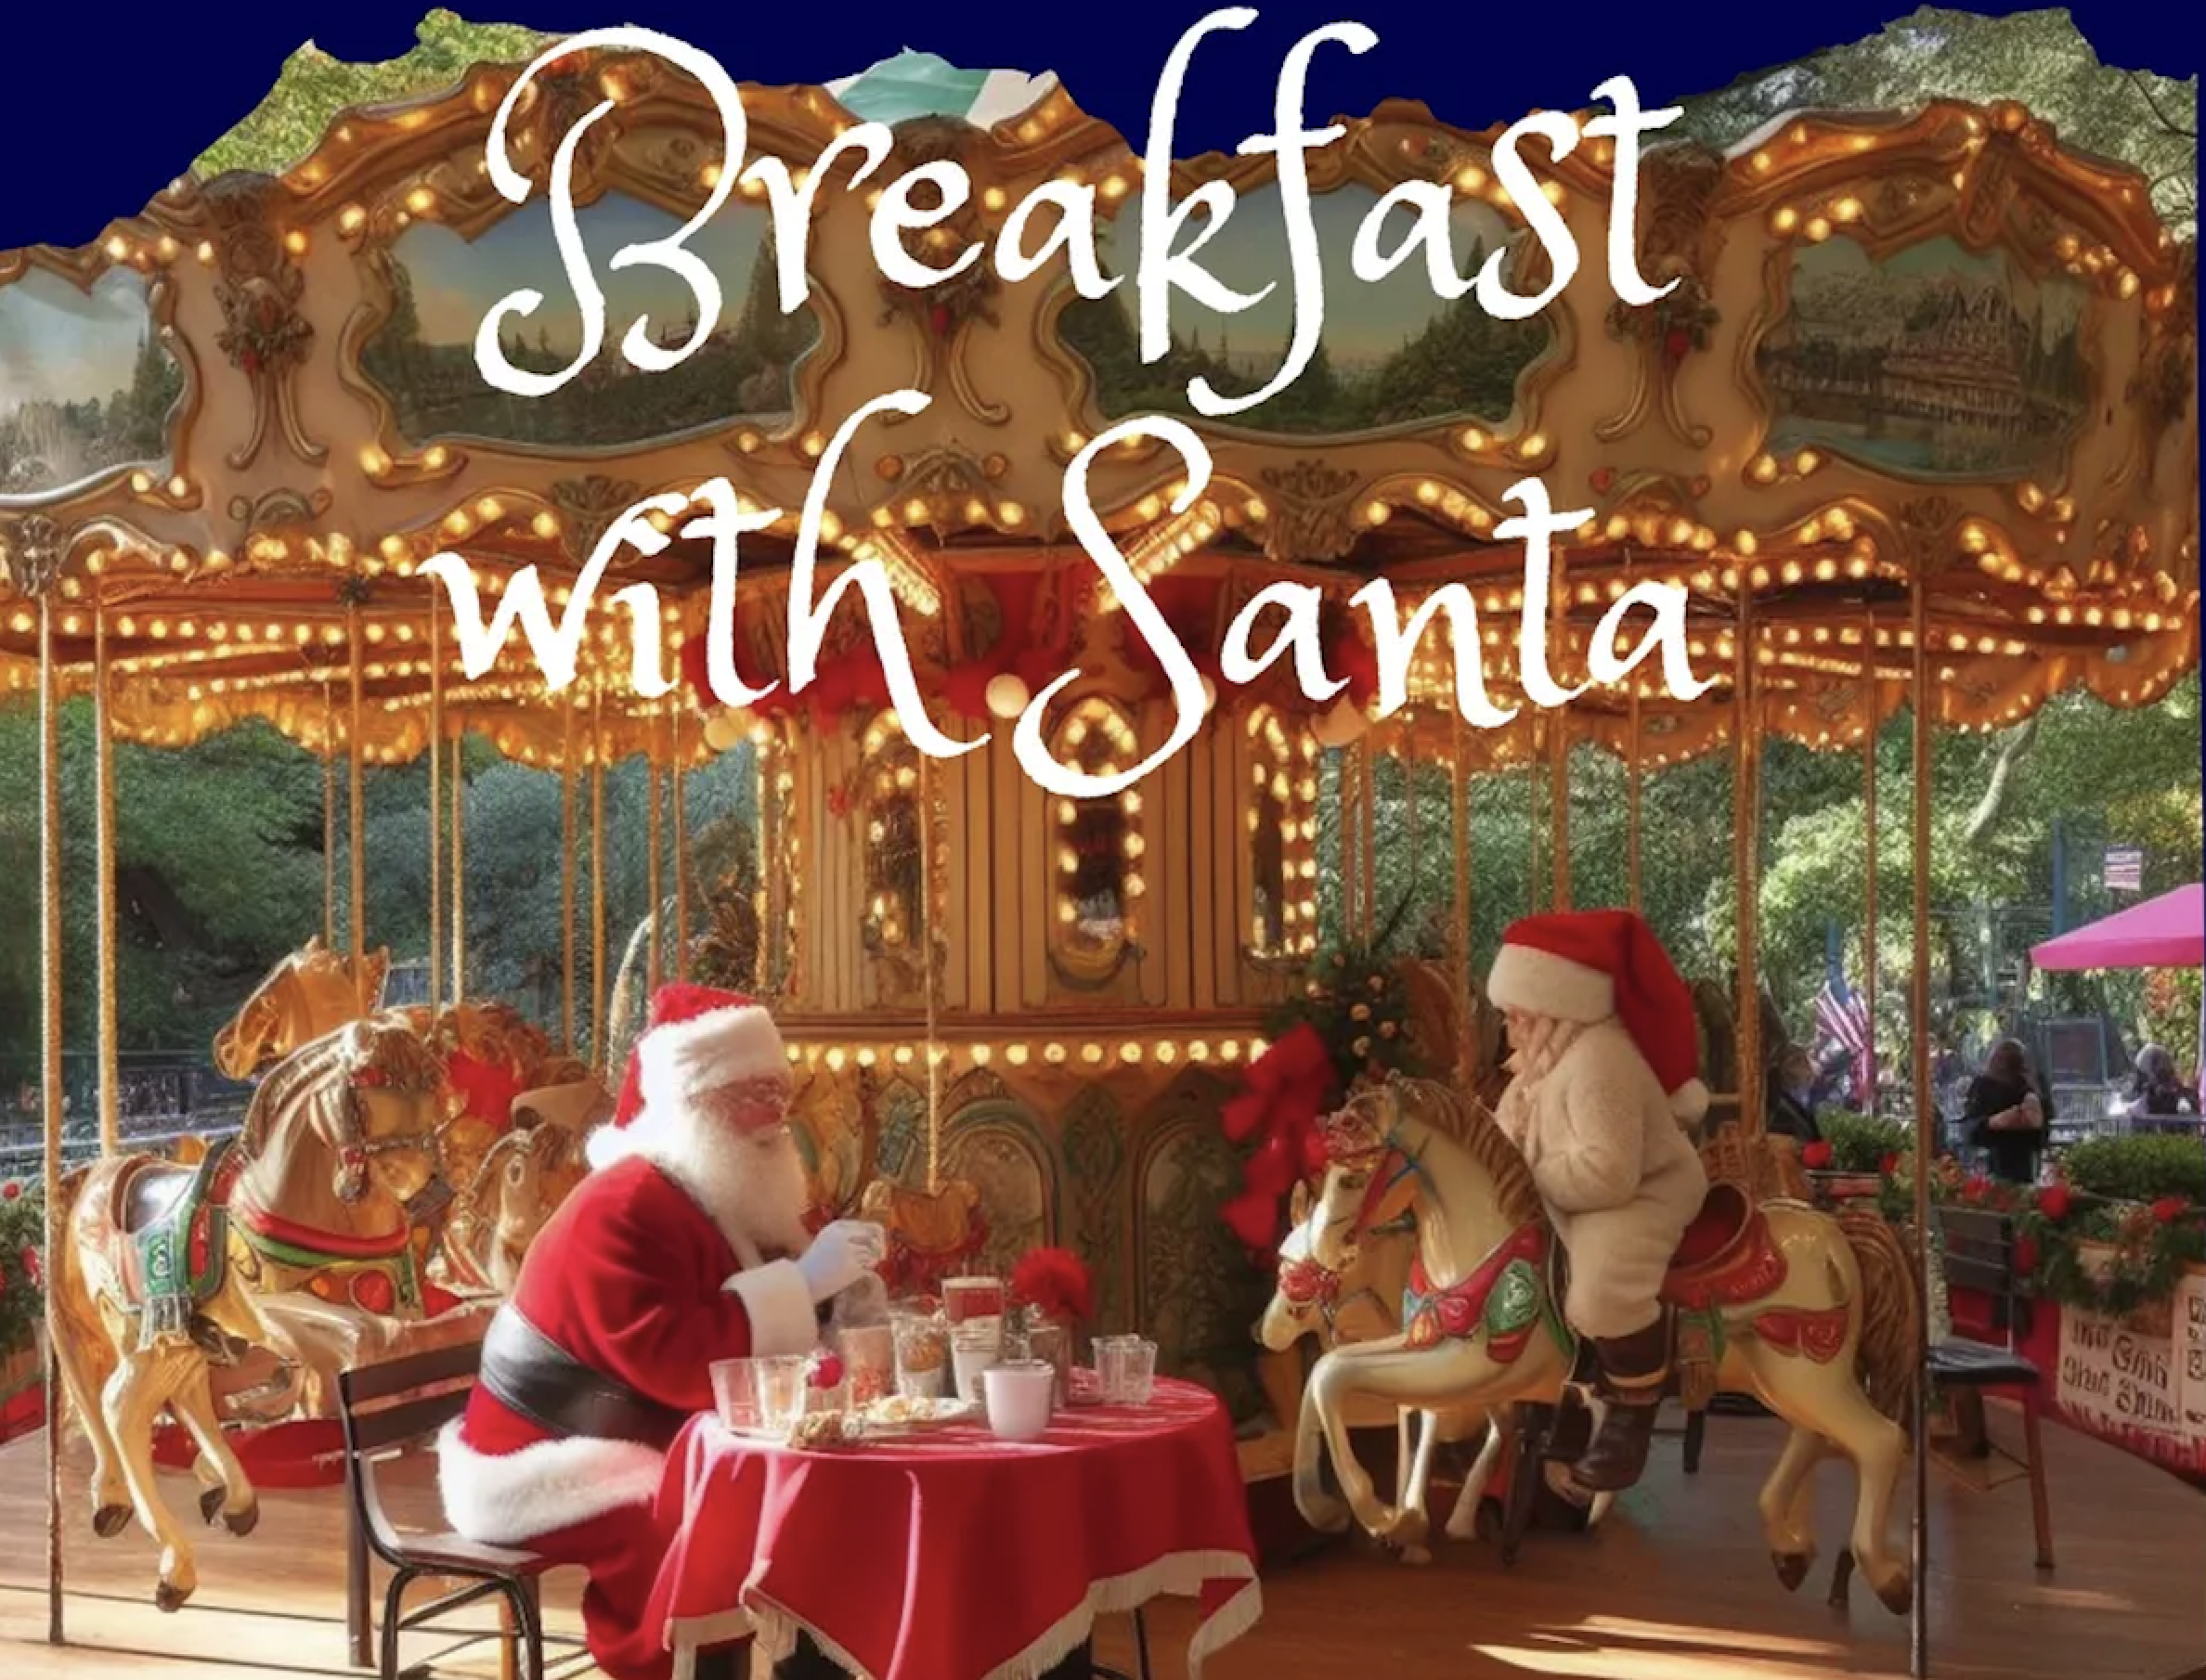 Breakfast with Santa Tilden Park